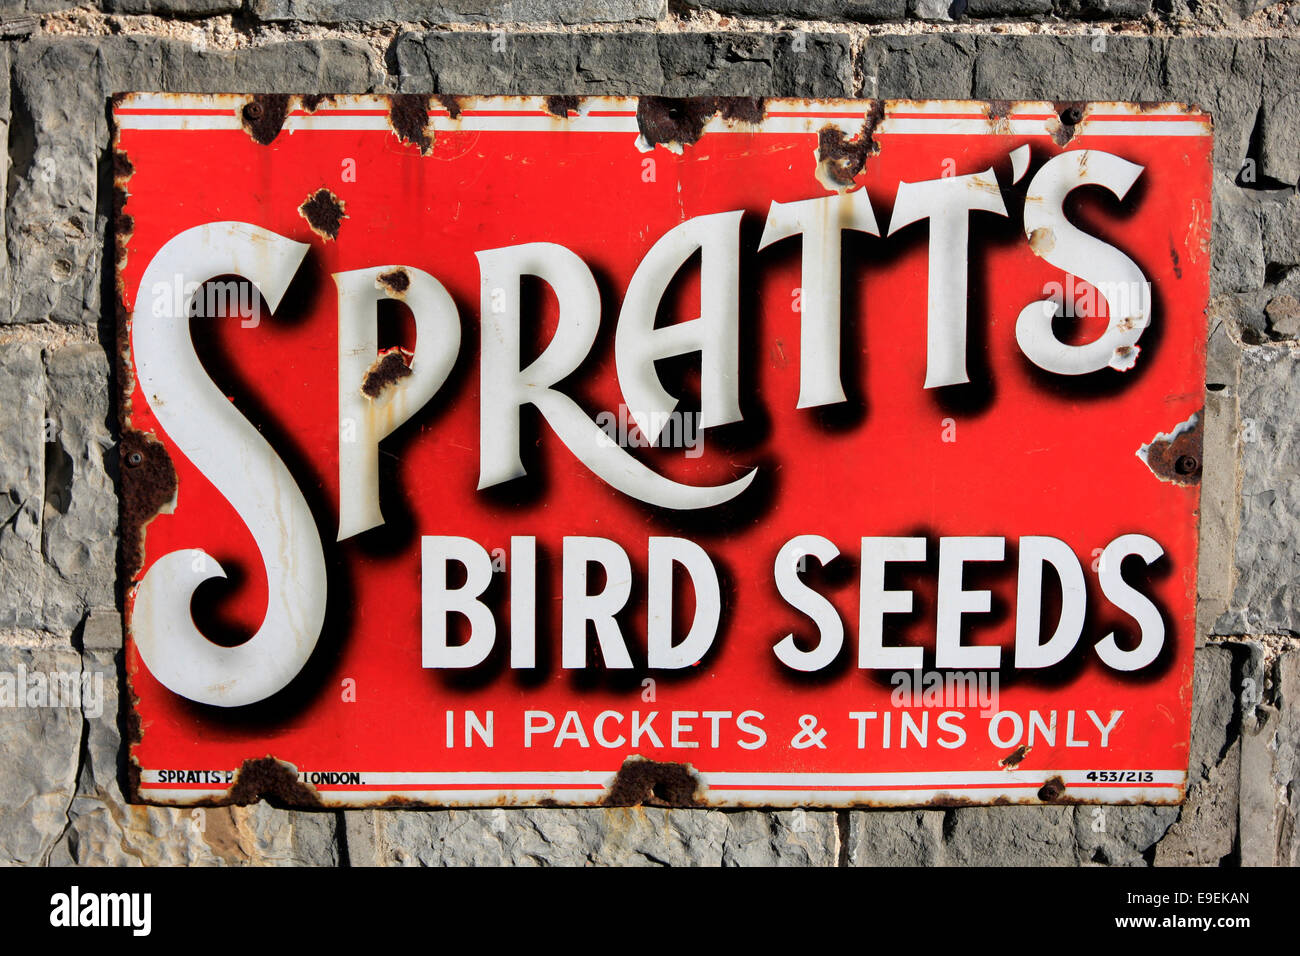 Vintage Spratts BIrd Seeds advertising sign Stock Photo